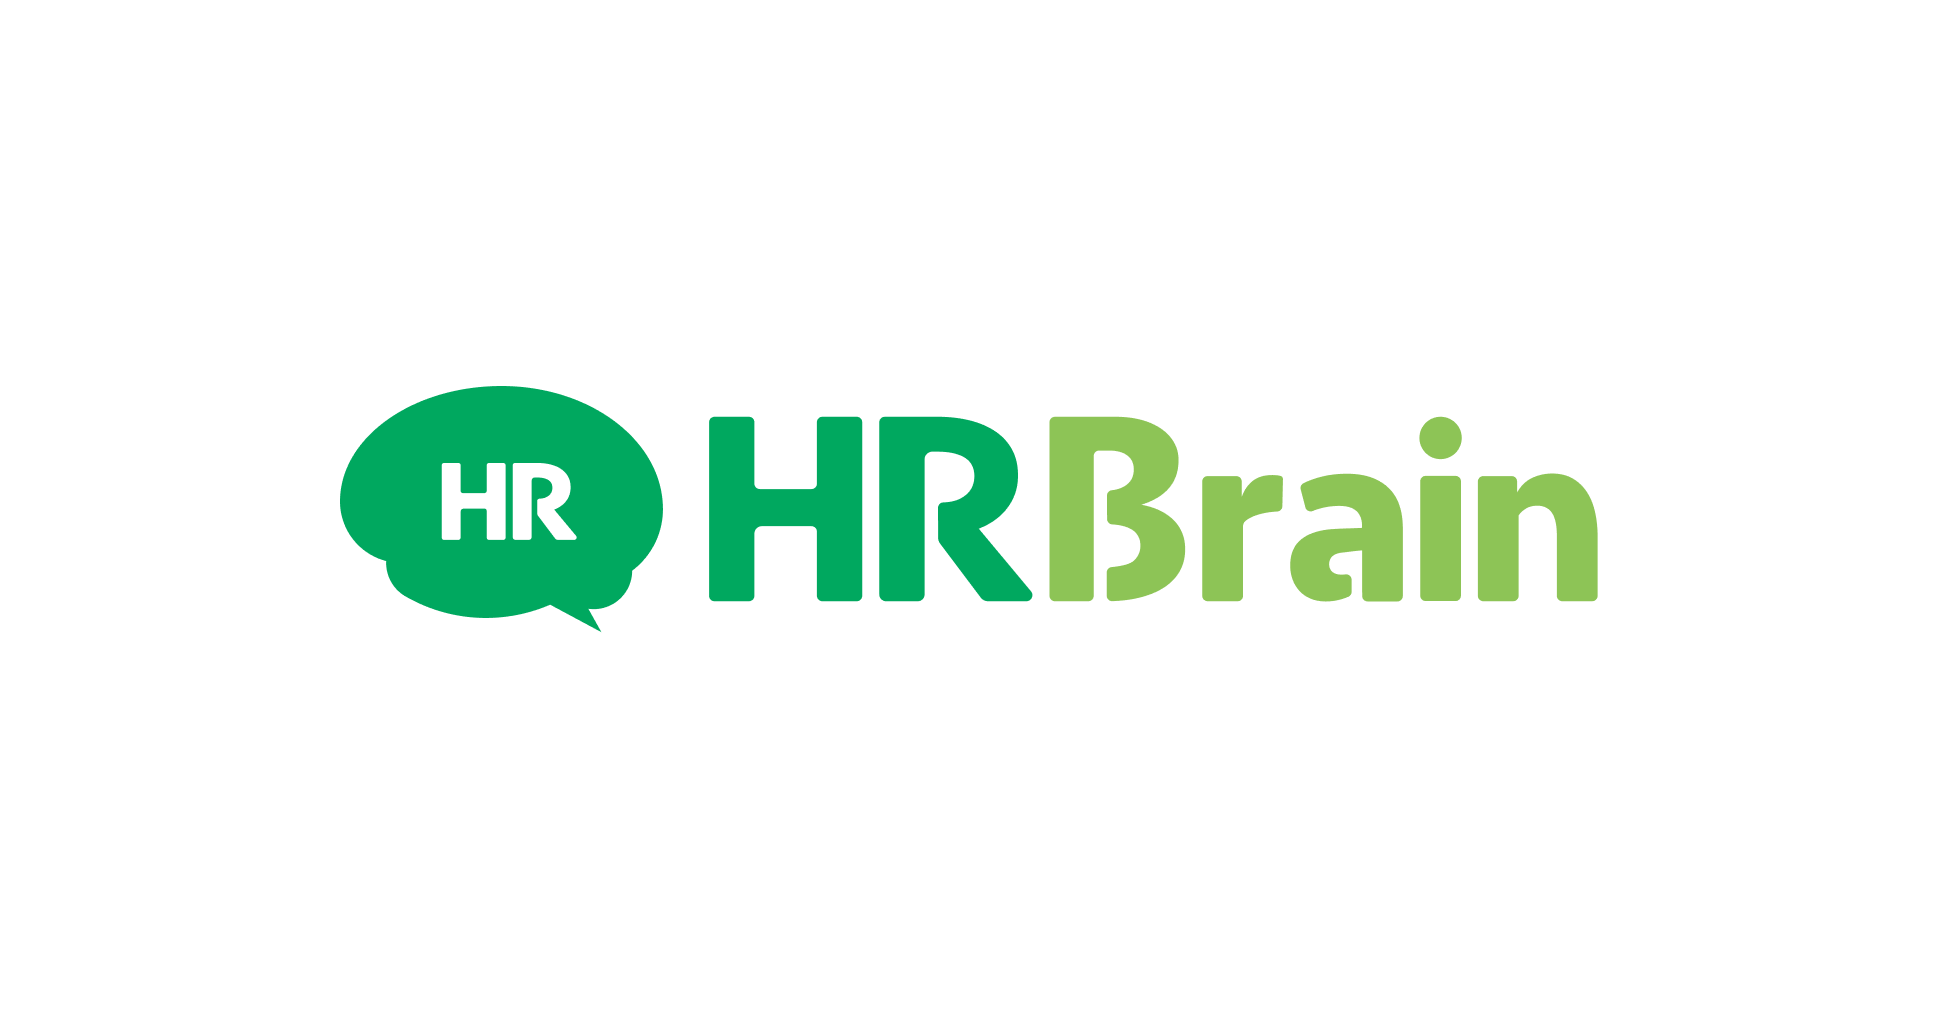 HRBrain